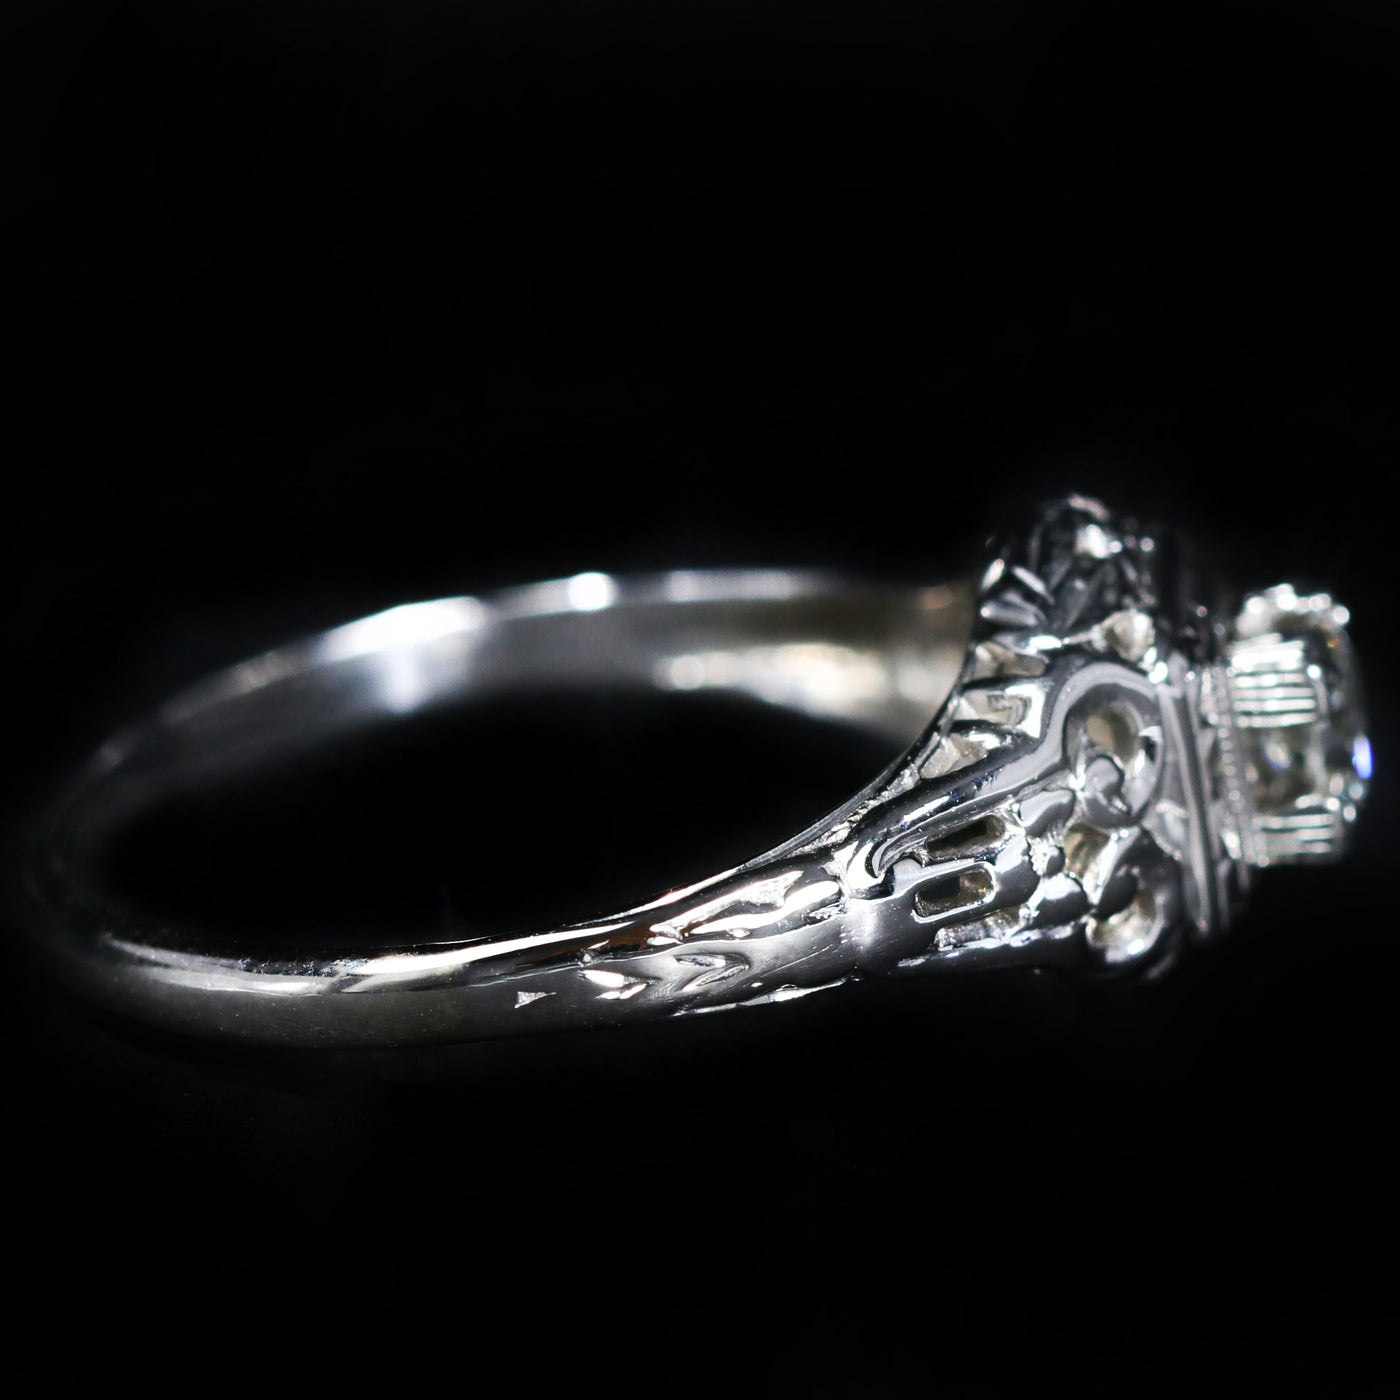 Art Deco 0.25 Carat Old Europen Cut Diamond Engagement Ring